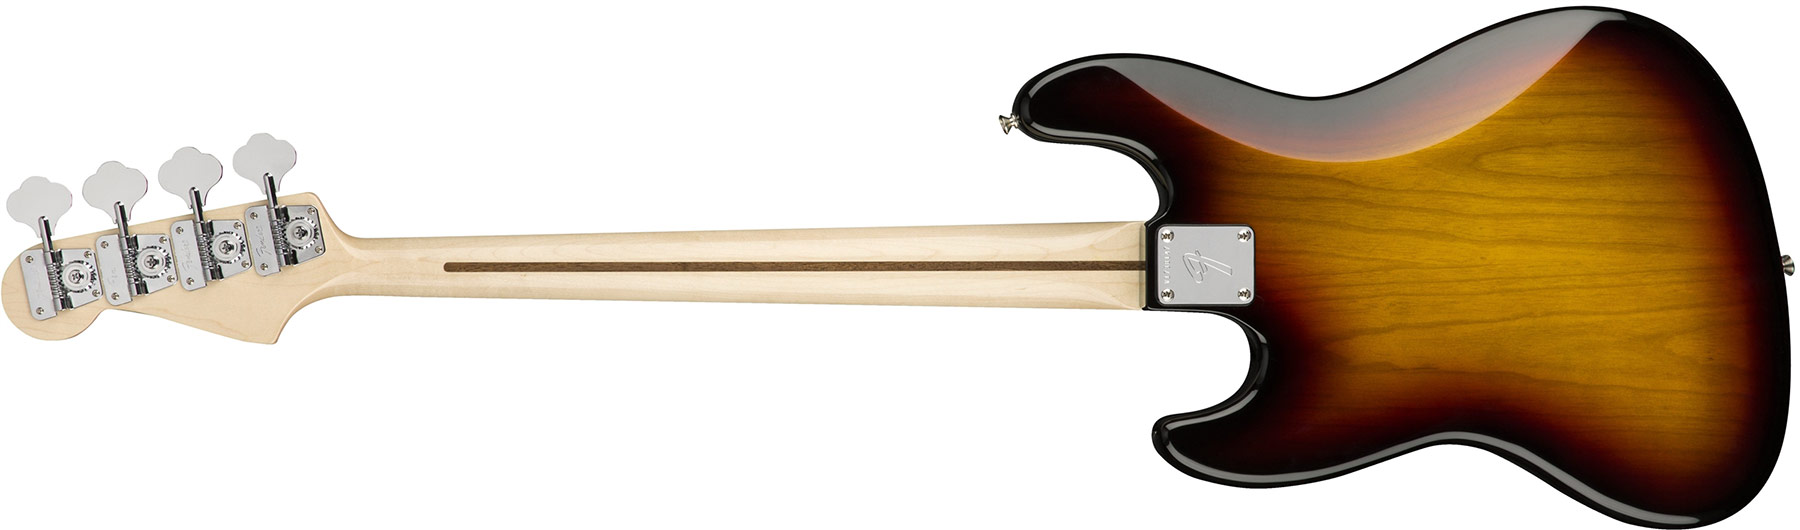 Fender Jazz Bass '70s American Original Usa Mn - 3-color Sunburst - Solid body electric bass - Variation 2